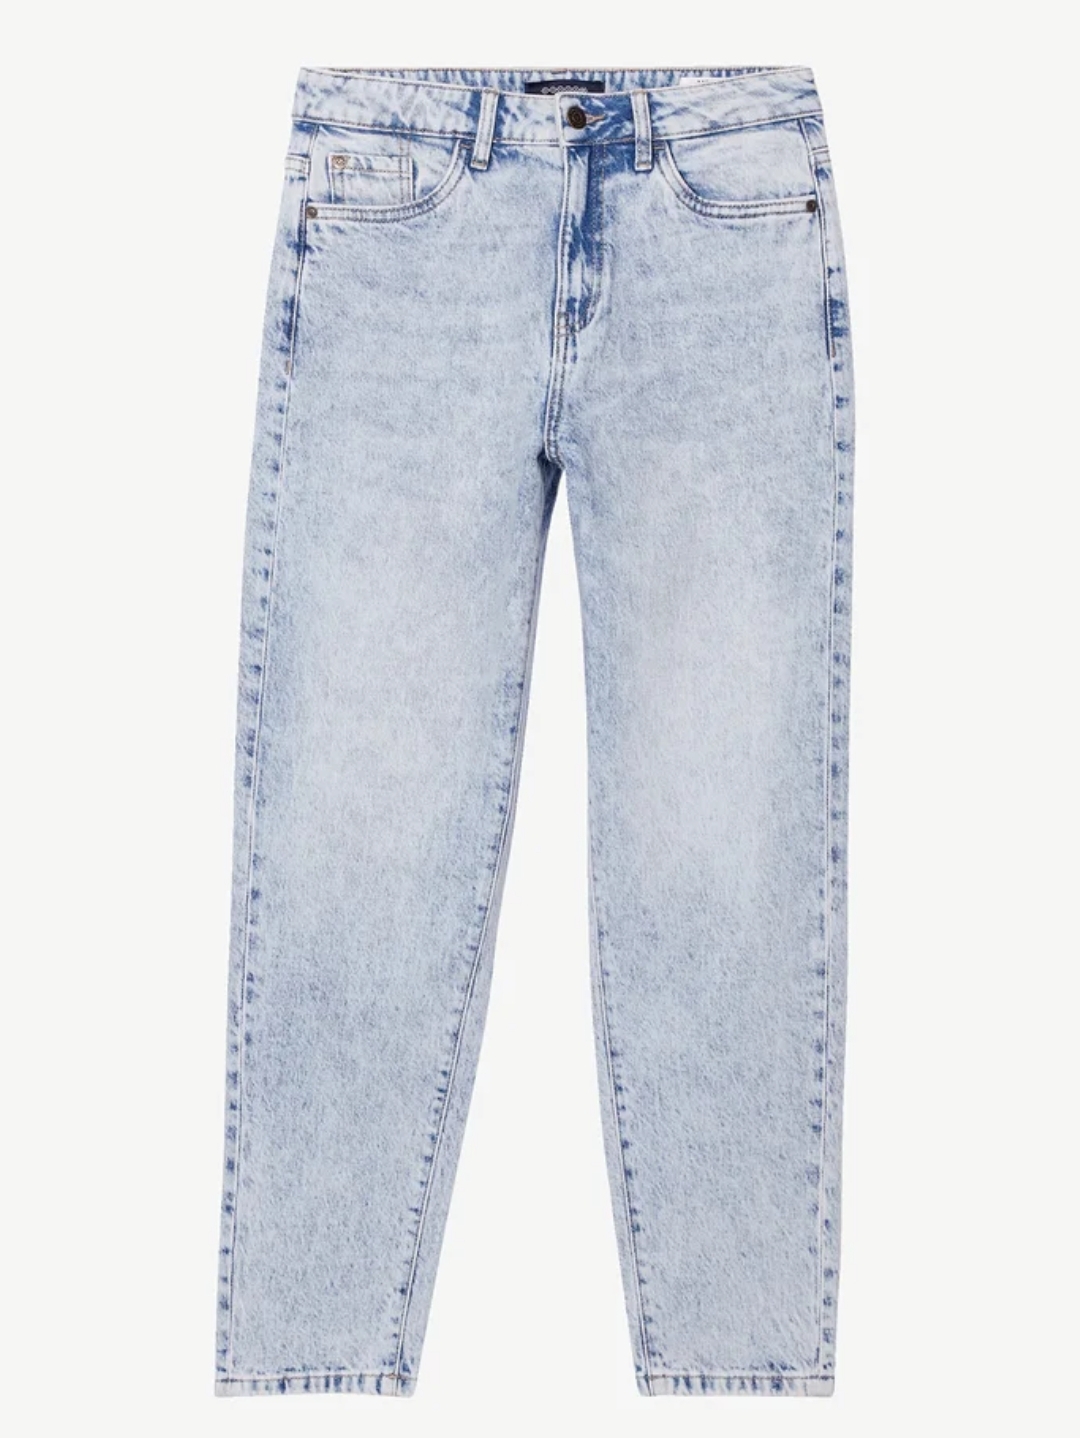 شلوار جینز زنانه 21464 سایز 36 تا 48